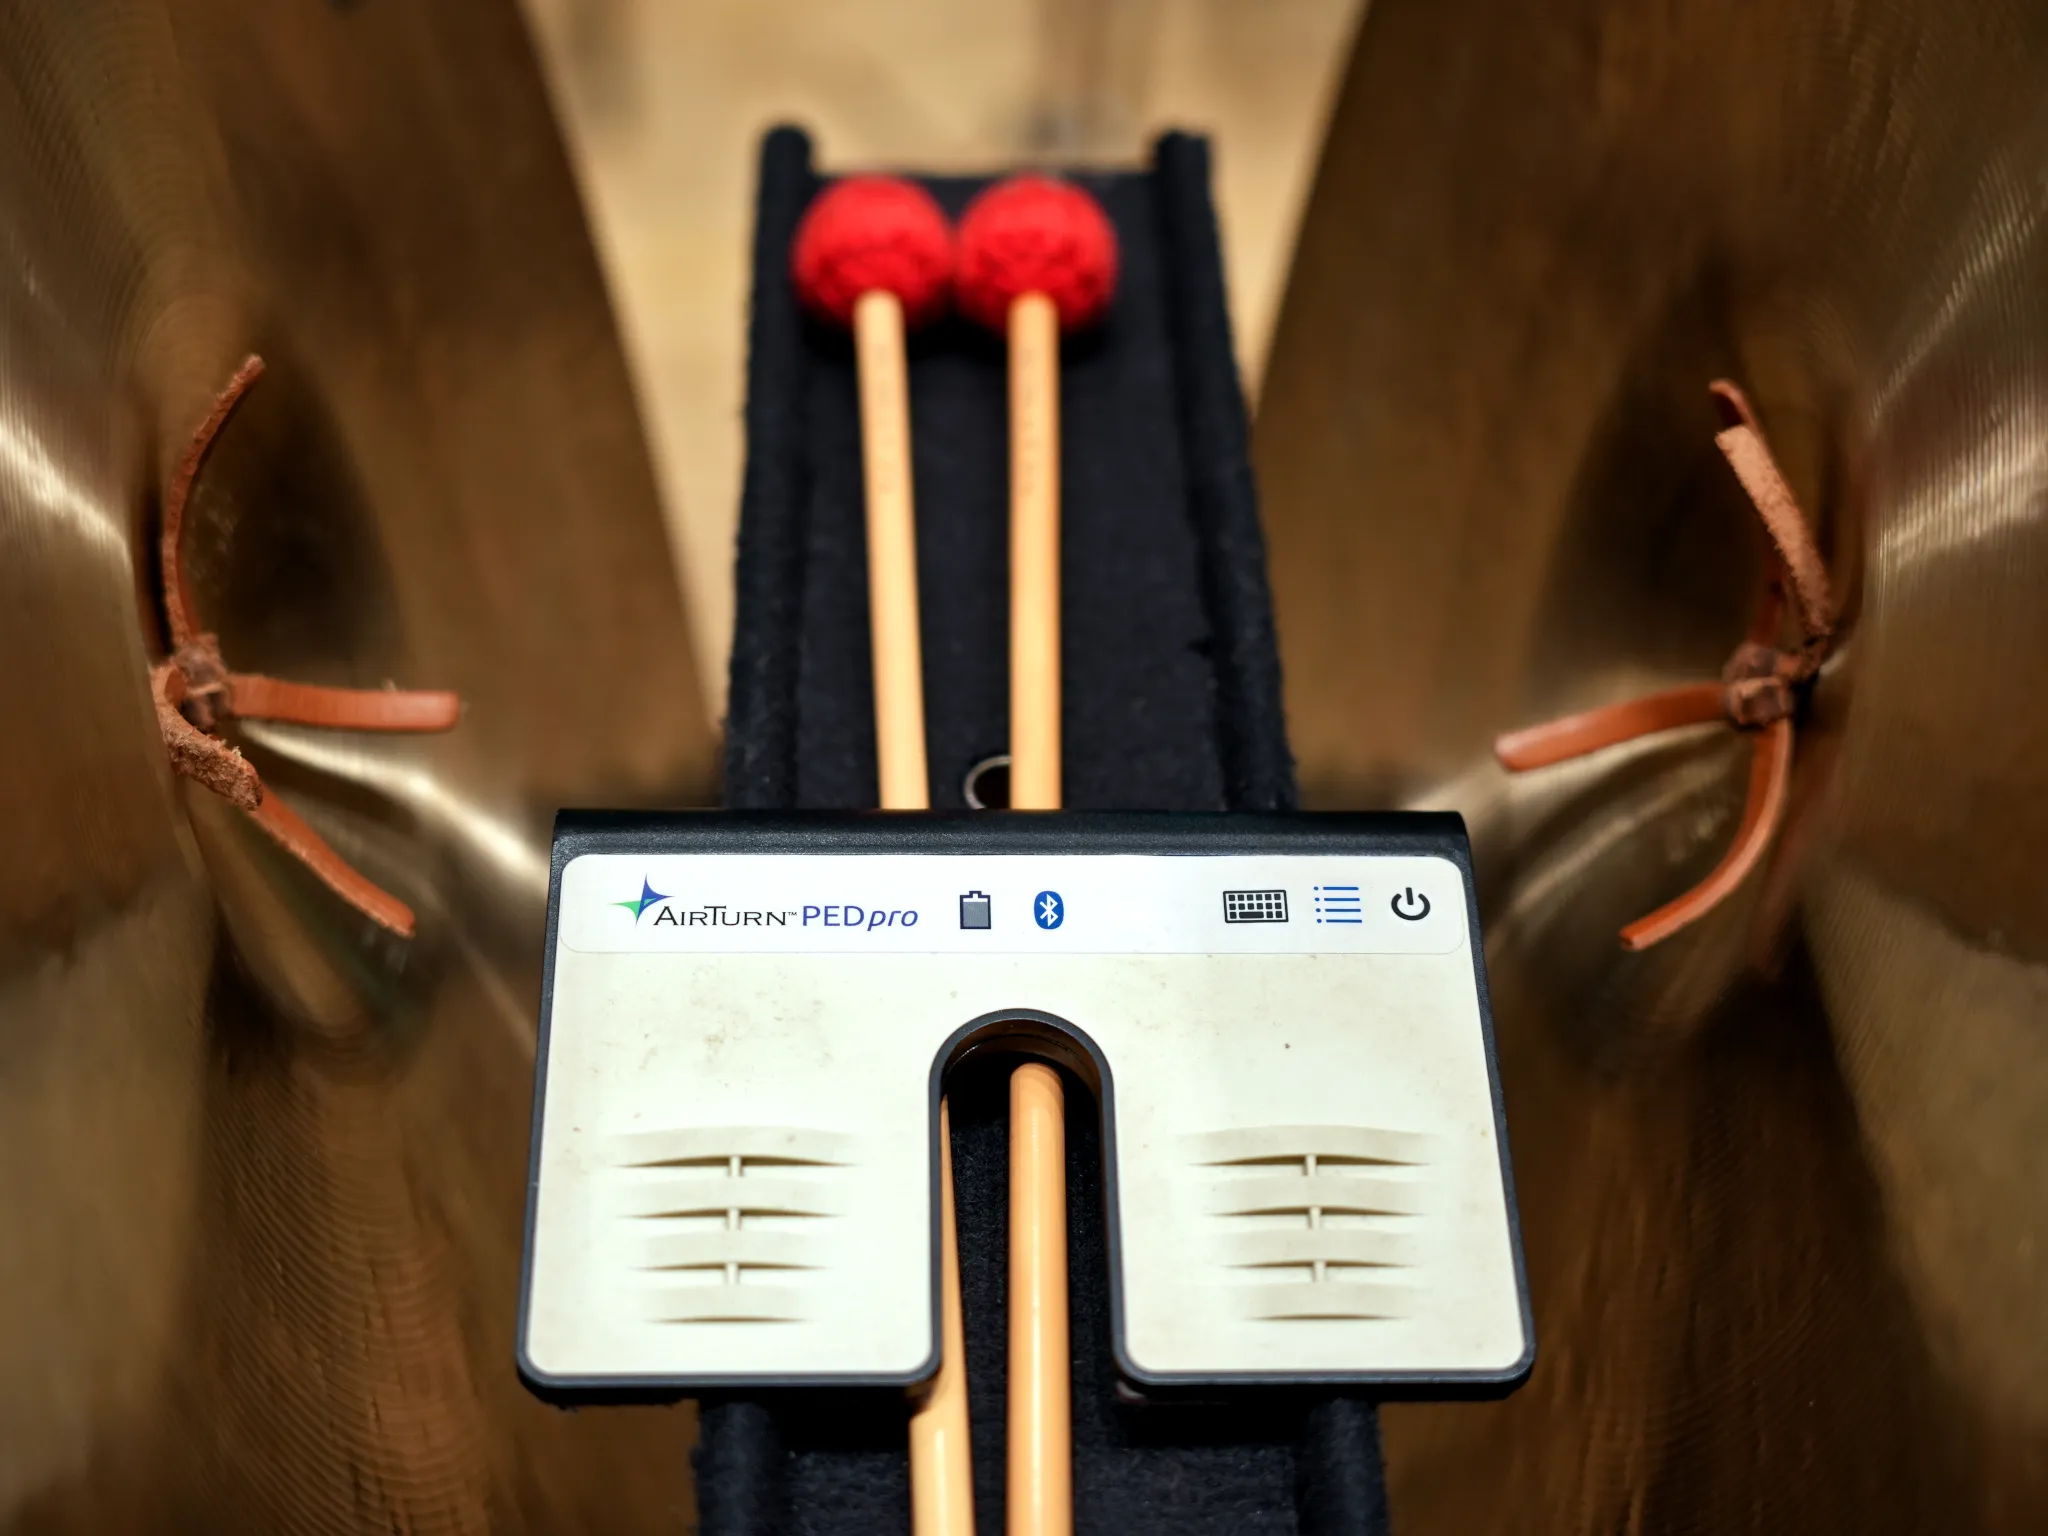 AirTurn PED pro Bluetooth-Pedal (Fußschalter) für iPad, iPhone, Android-Tablets und Windows-Tablets